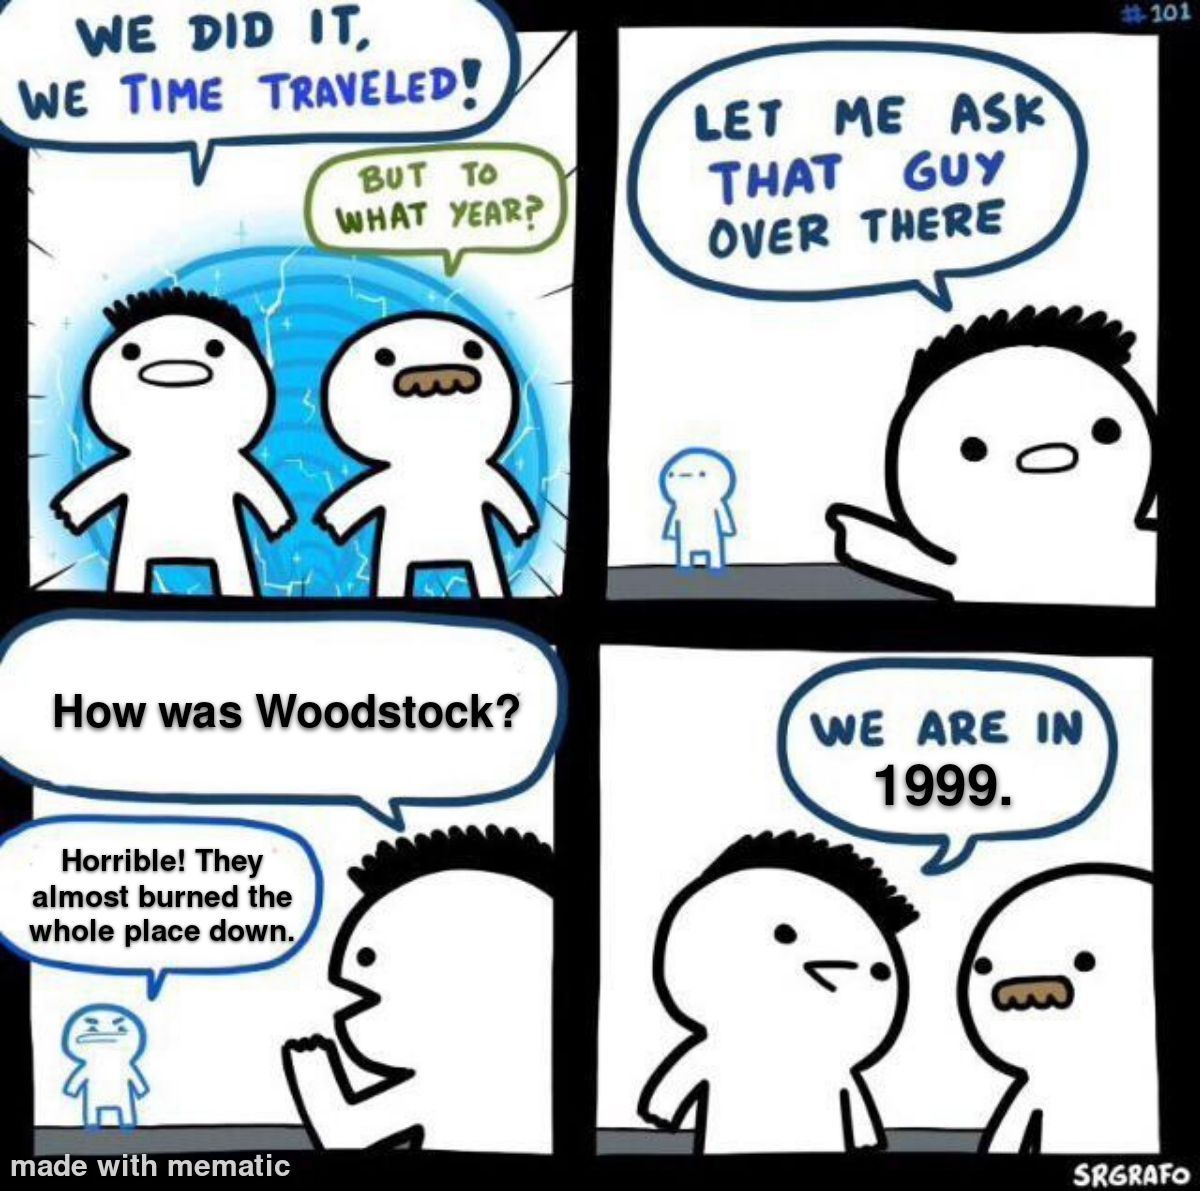 Woodstock '99, the last Woodstock.